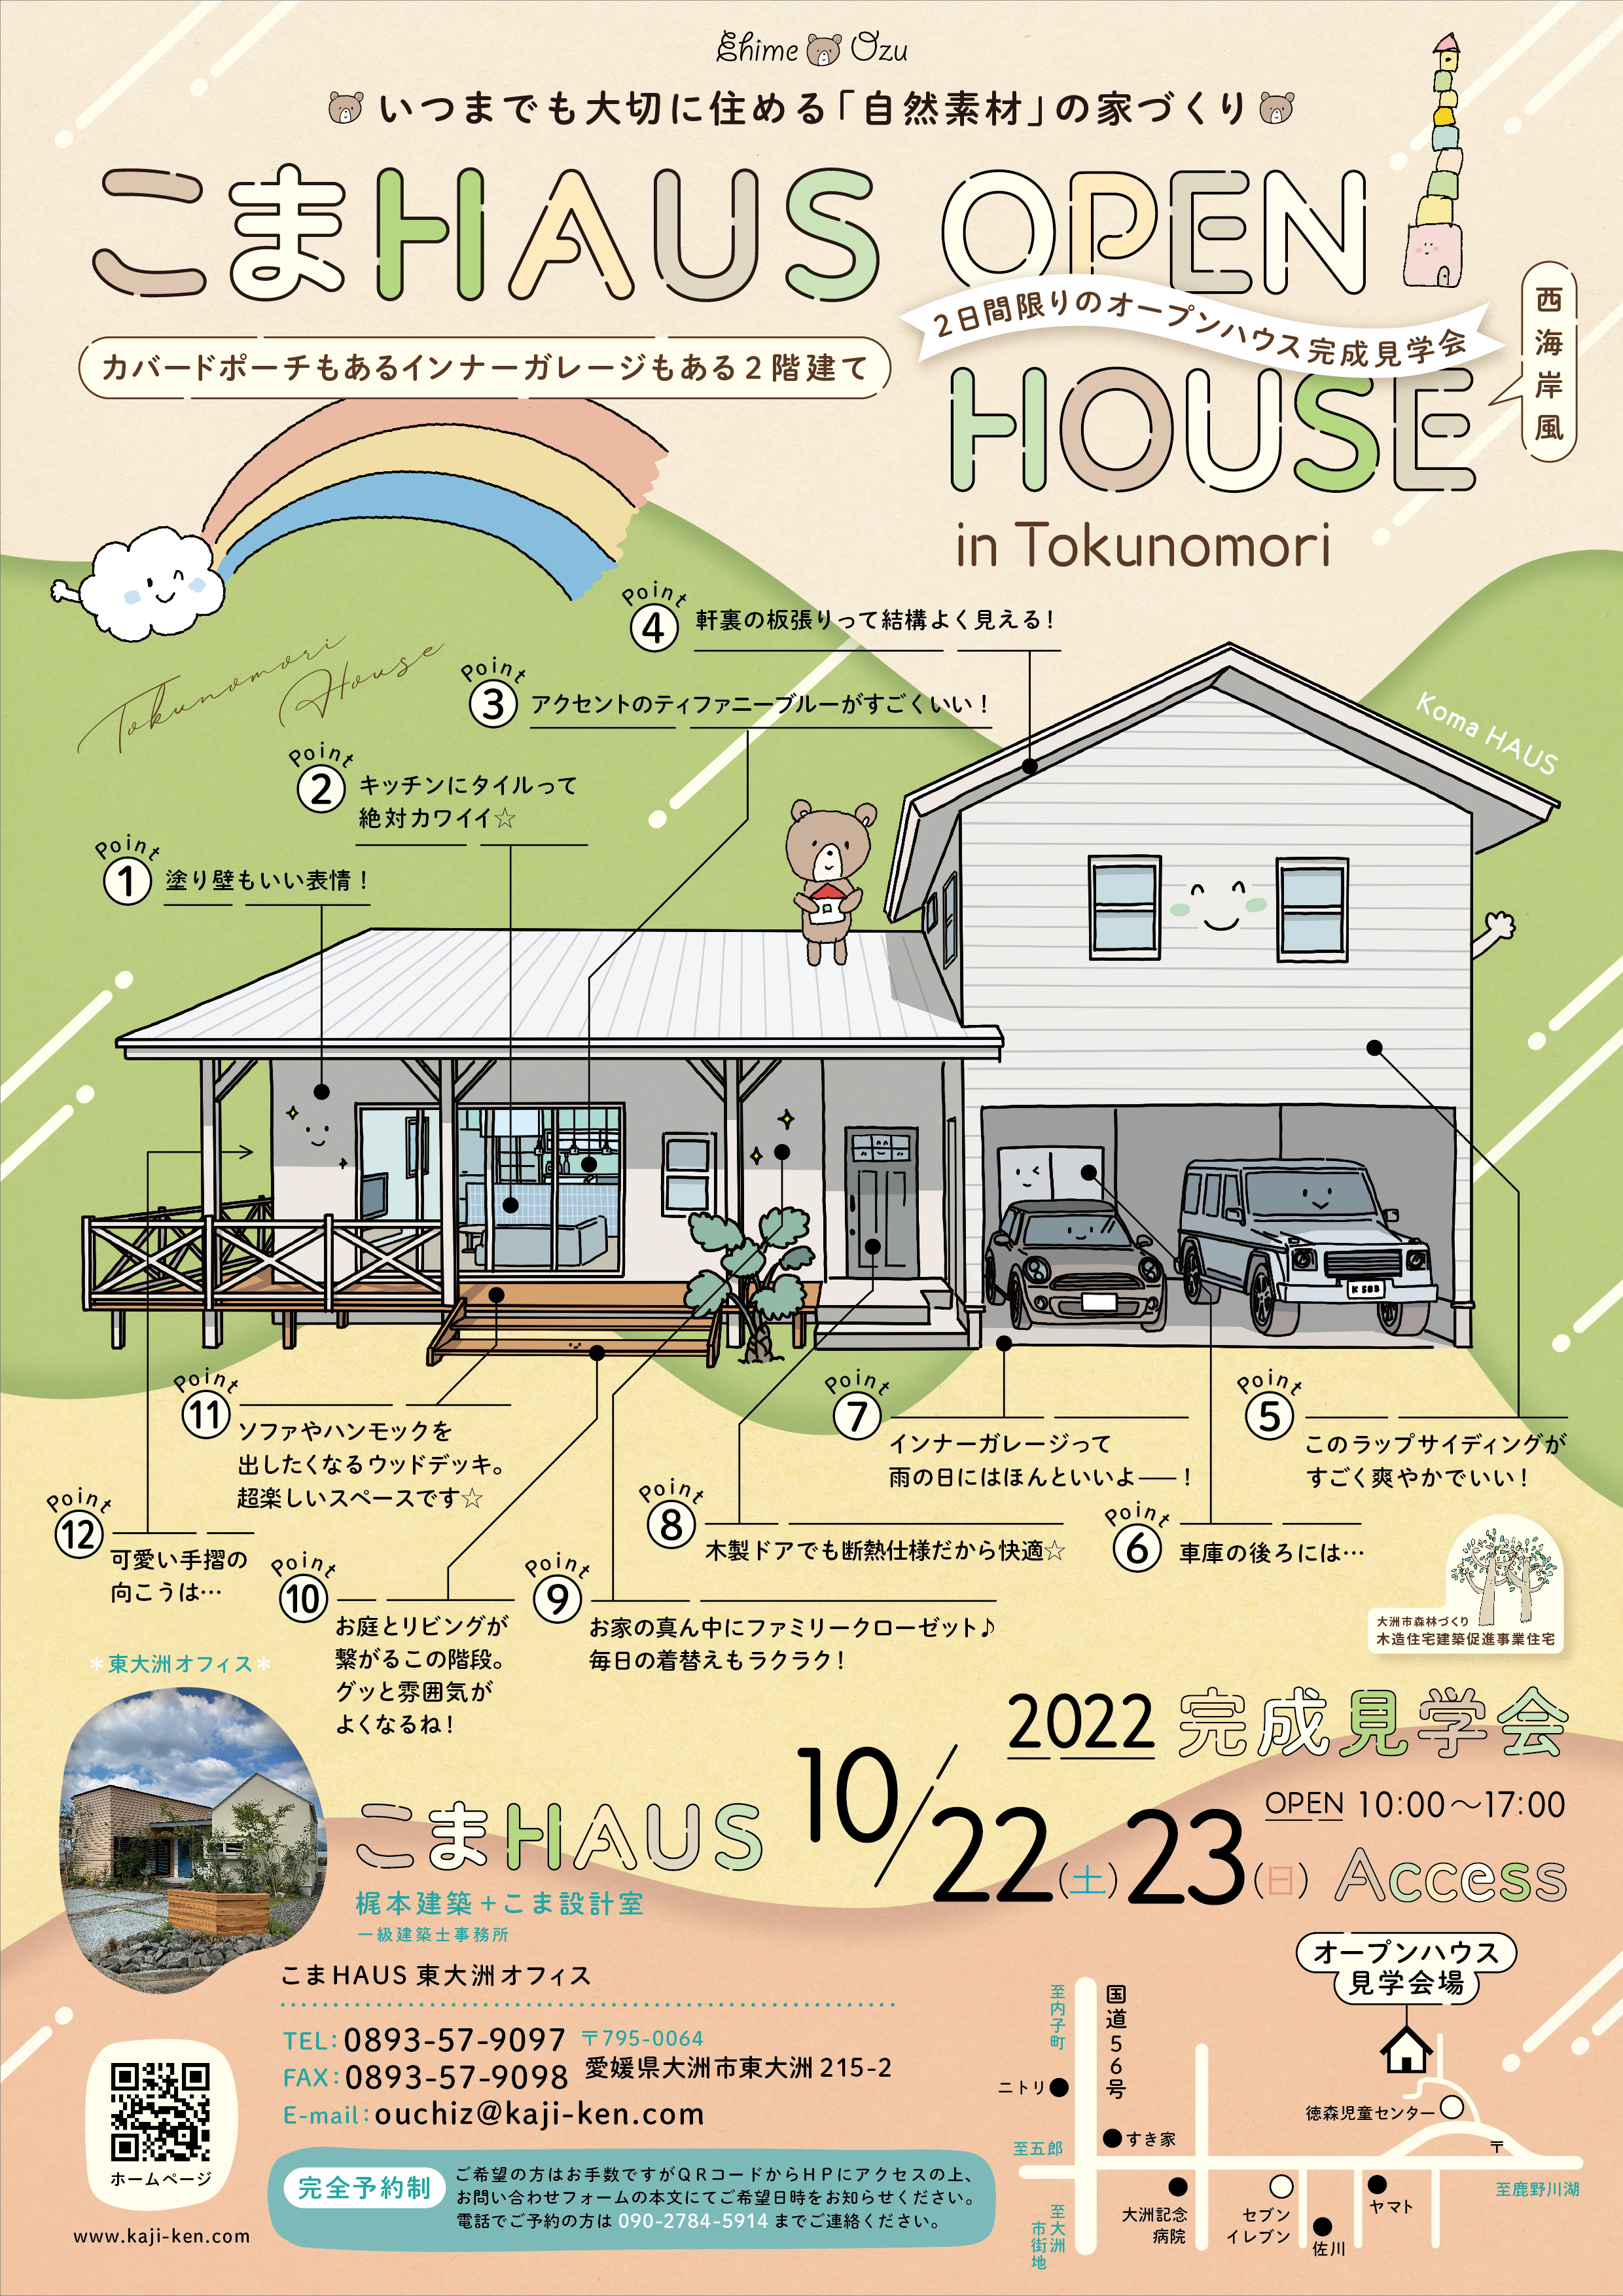 OPEN HOUSE in Tokunomori　ｶﾊﾞｰﾄﾞﾎﾟｰﾁもあるｲﾝﾅｰｶﾞﾚｰｼﾞもある2階建て